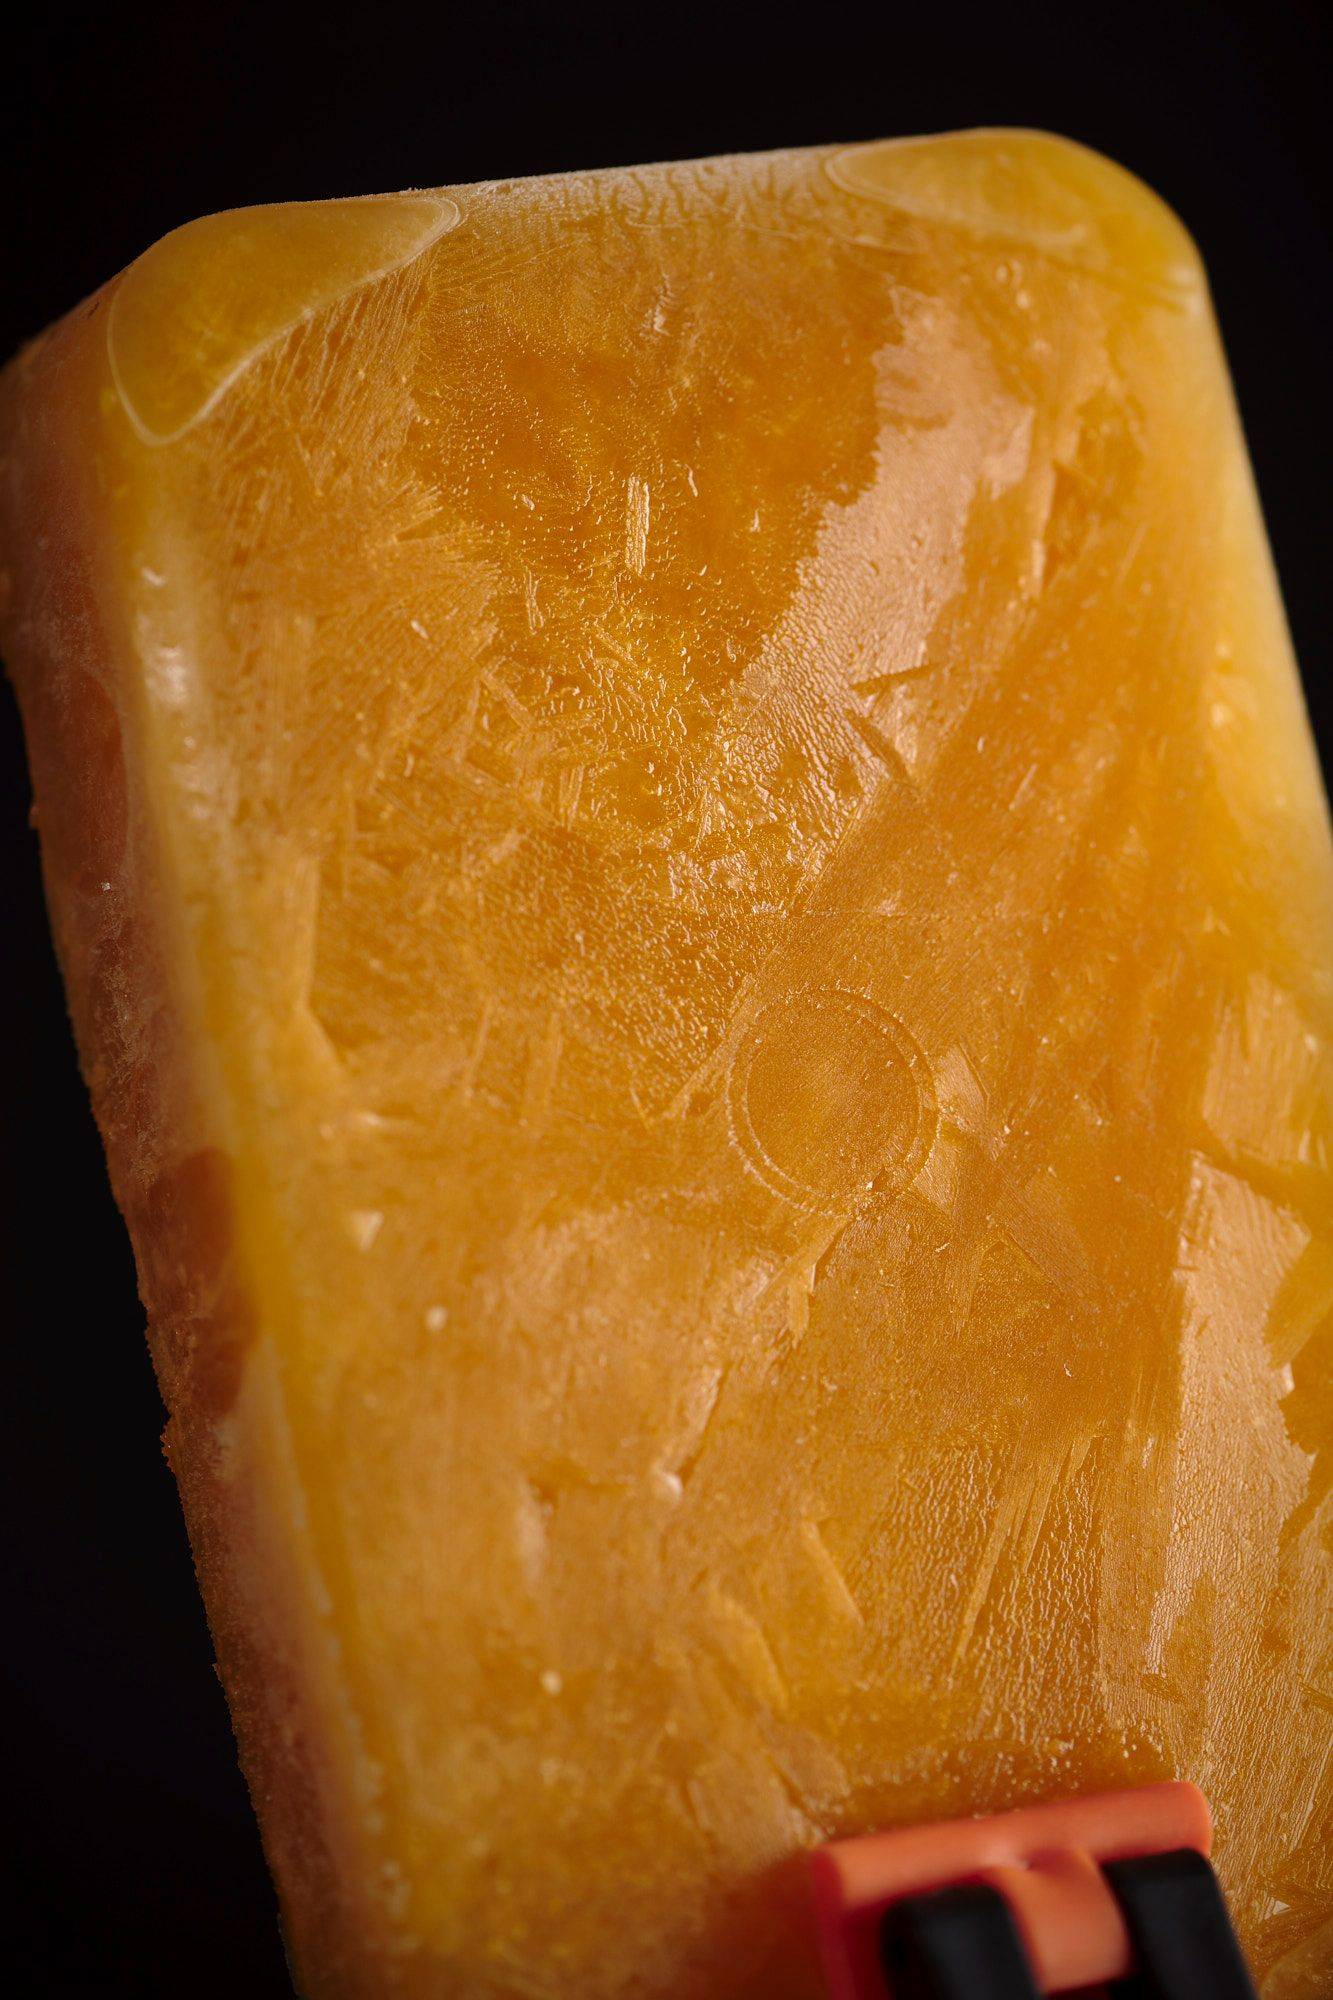 frozen tangerine granita with black background